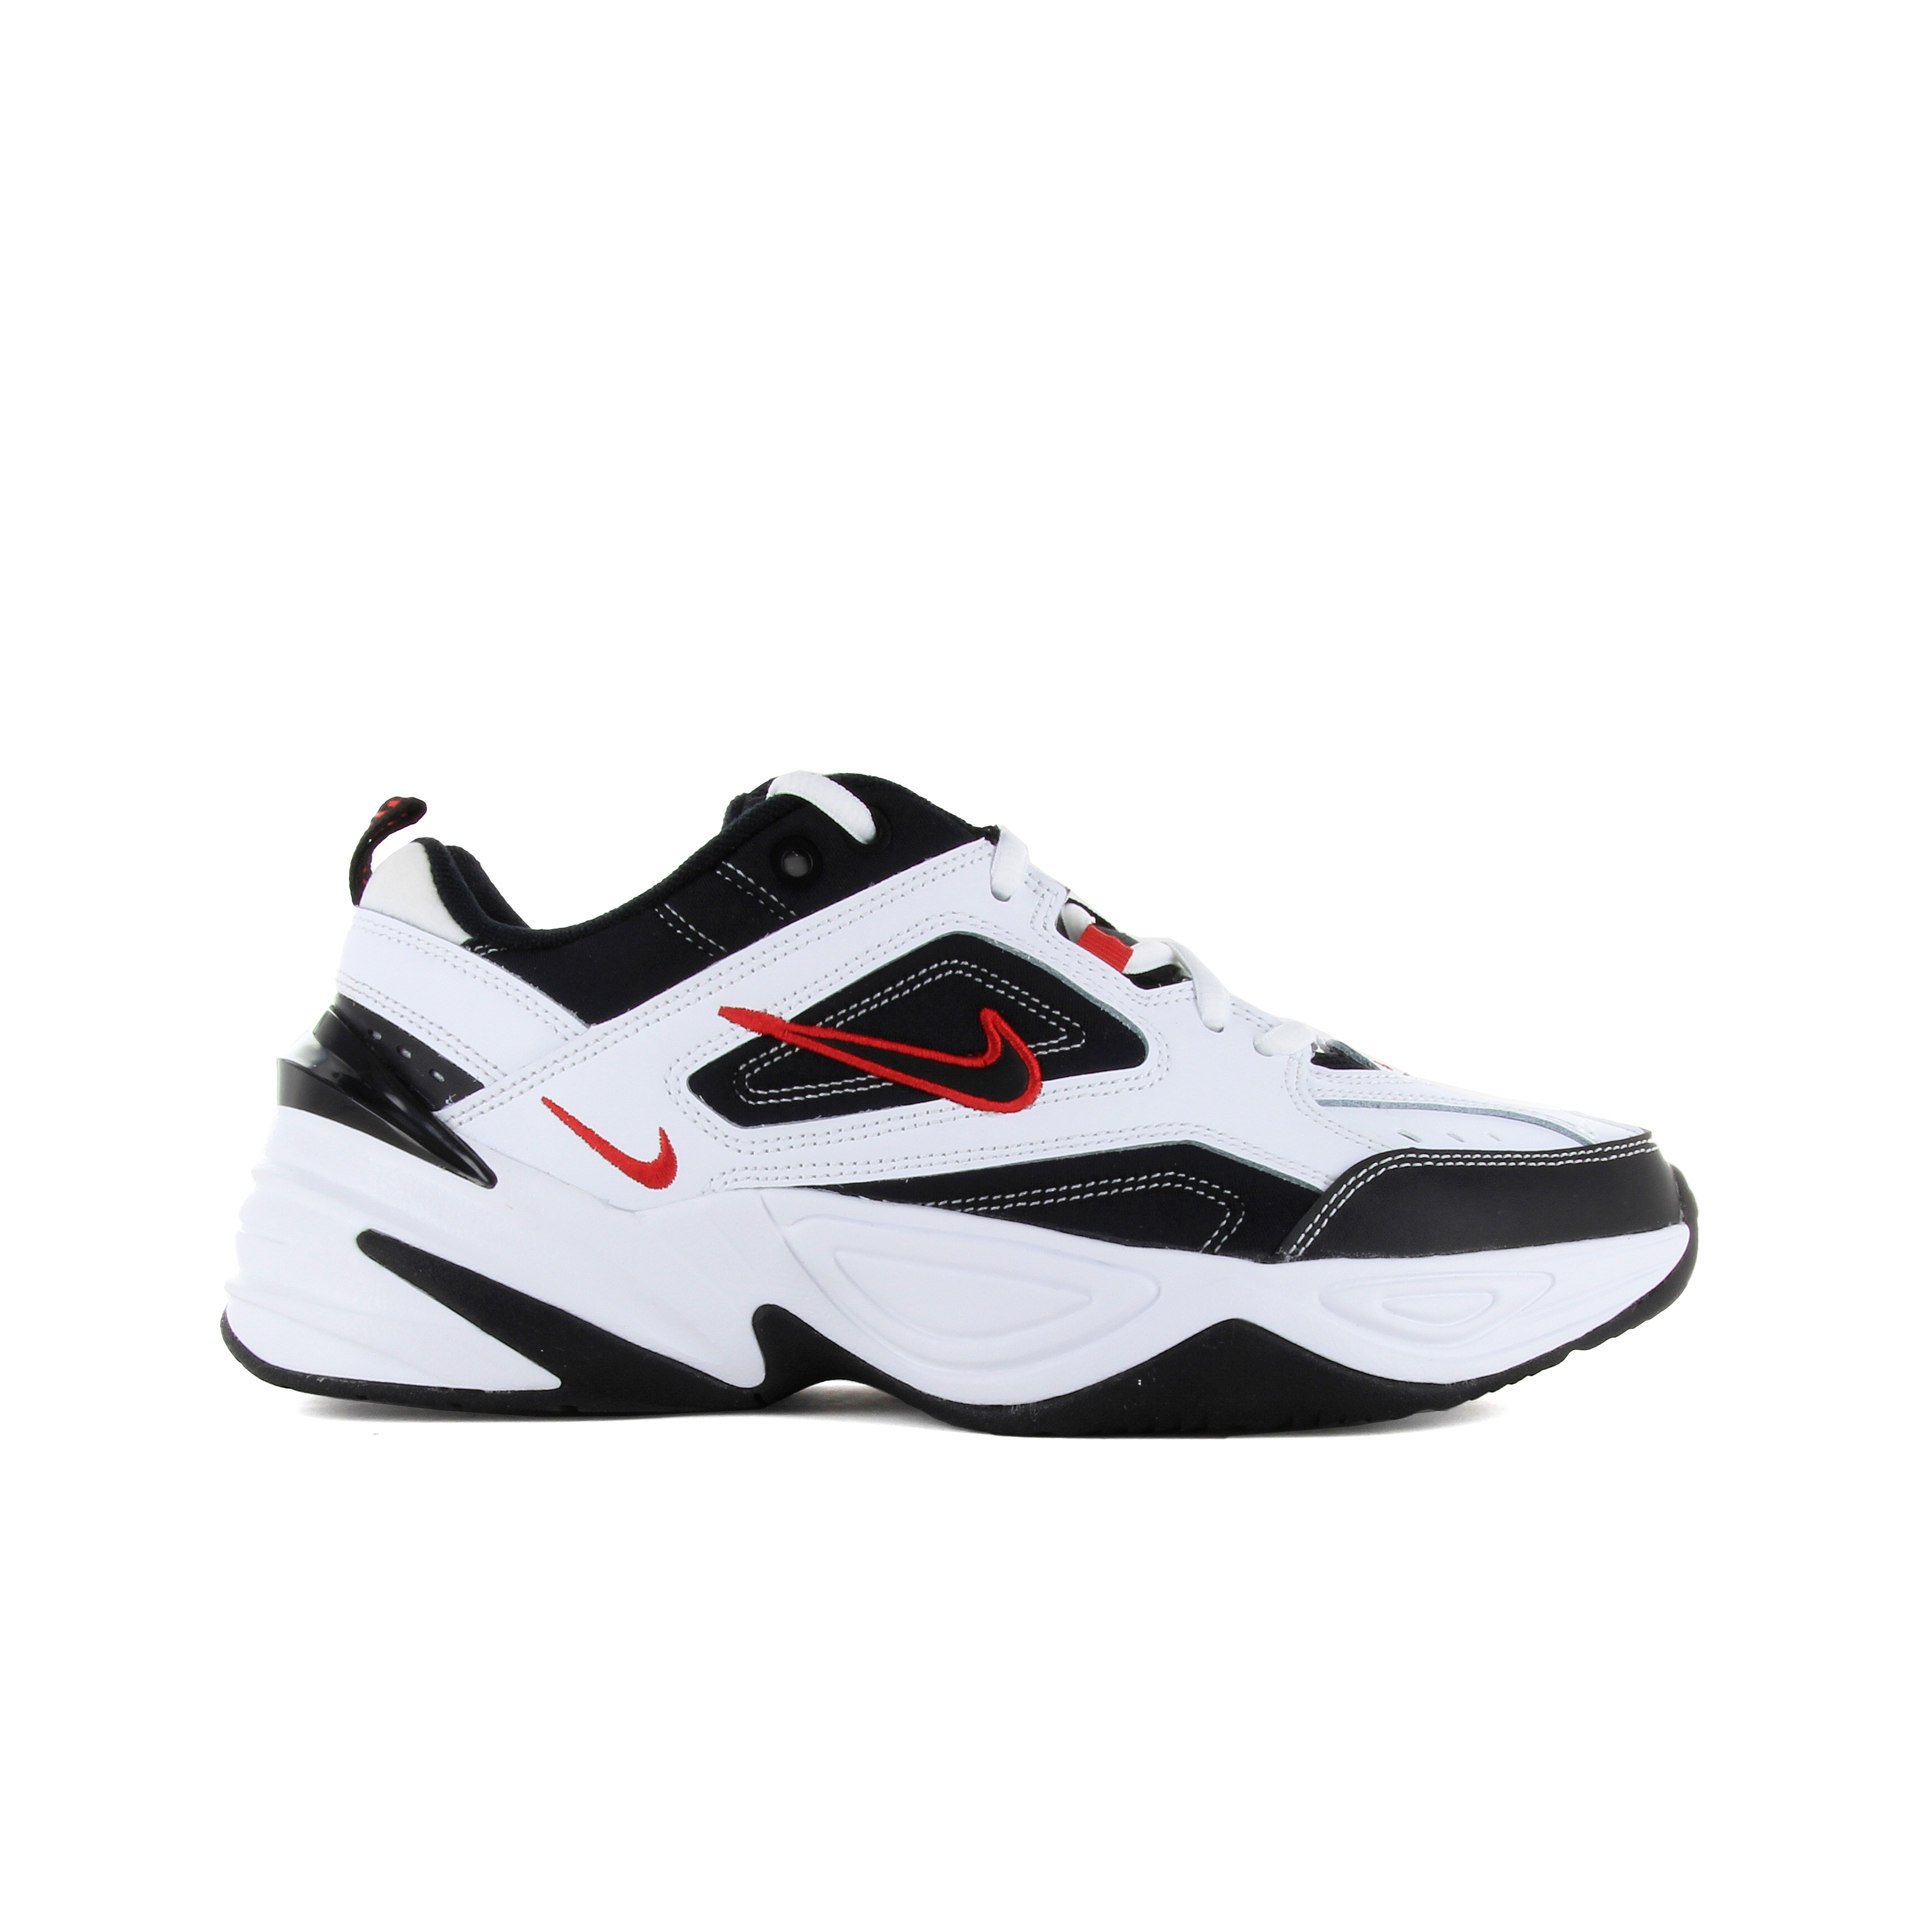 motivo Diacrítico Algebraico Nike Nike M2k Tekno zapatillas running hombre | Dooers Sneakers